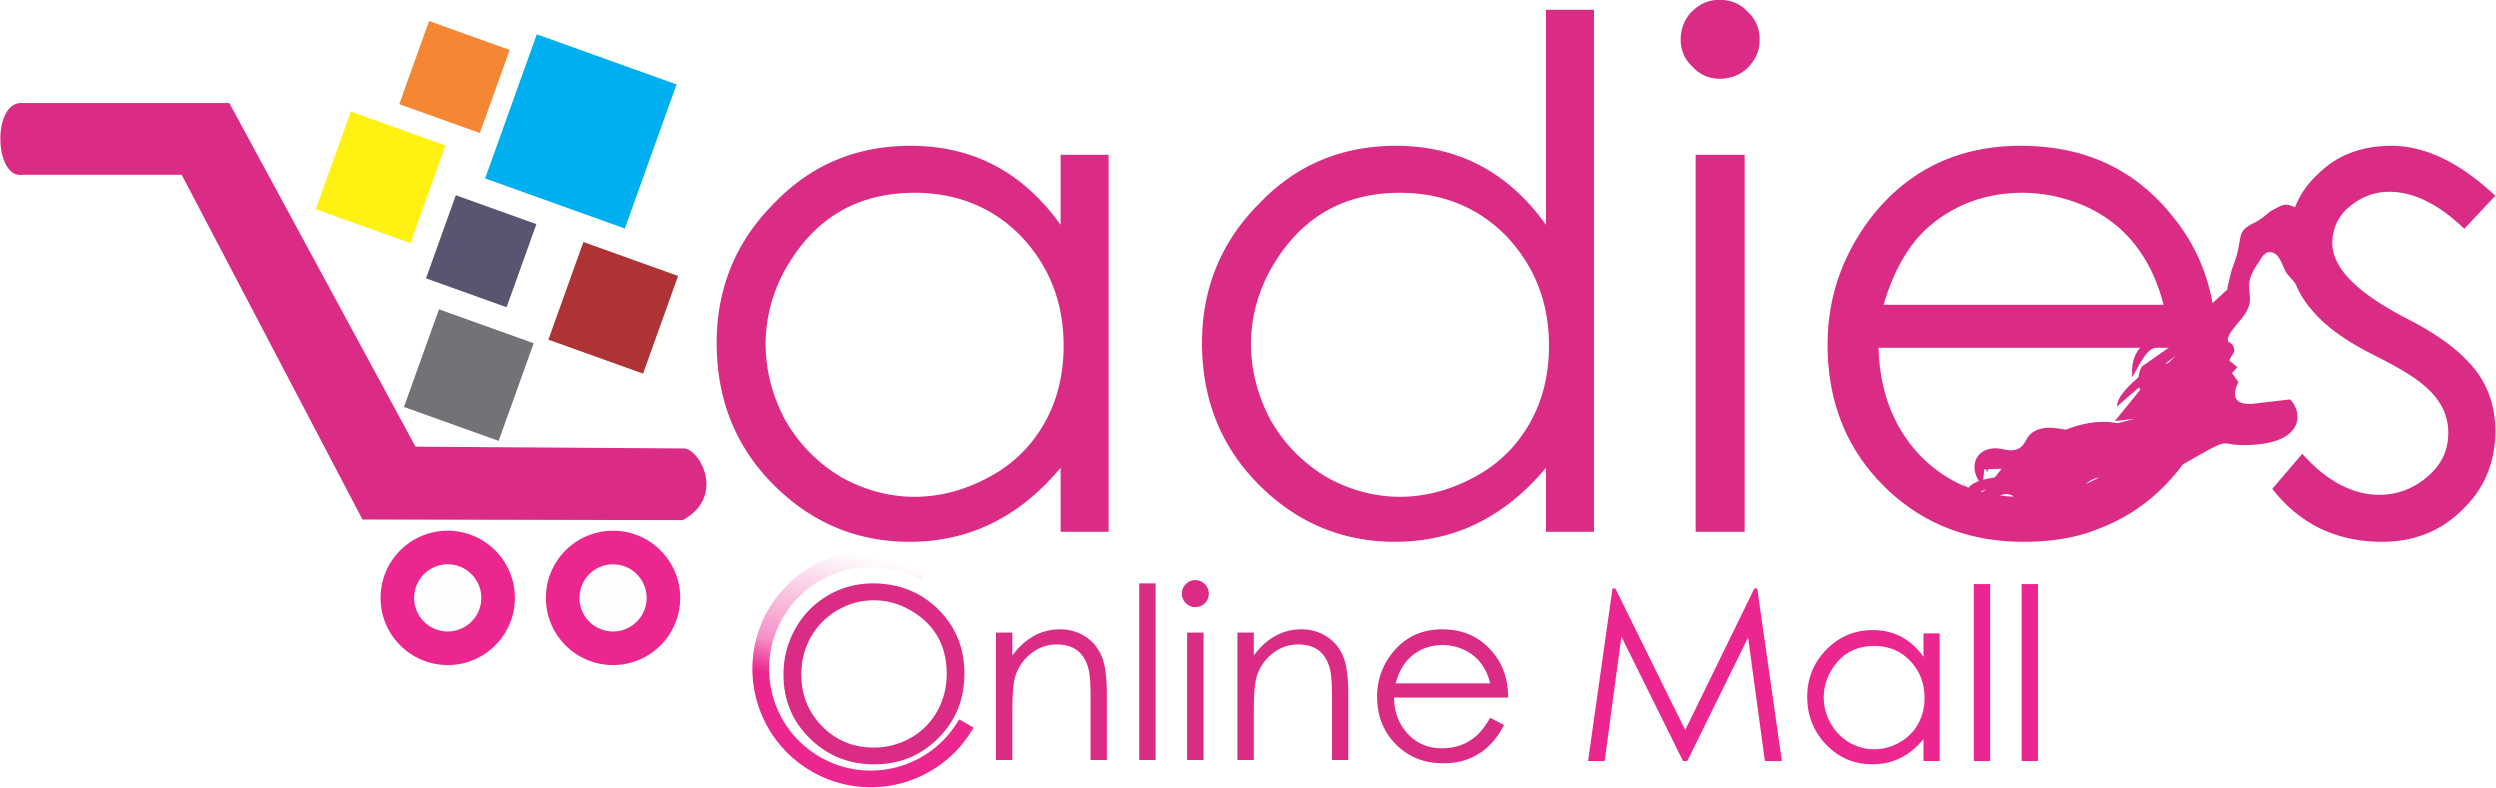 Ladies Online Mall - Viadeo Logo Vector (2496x788)